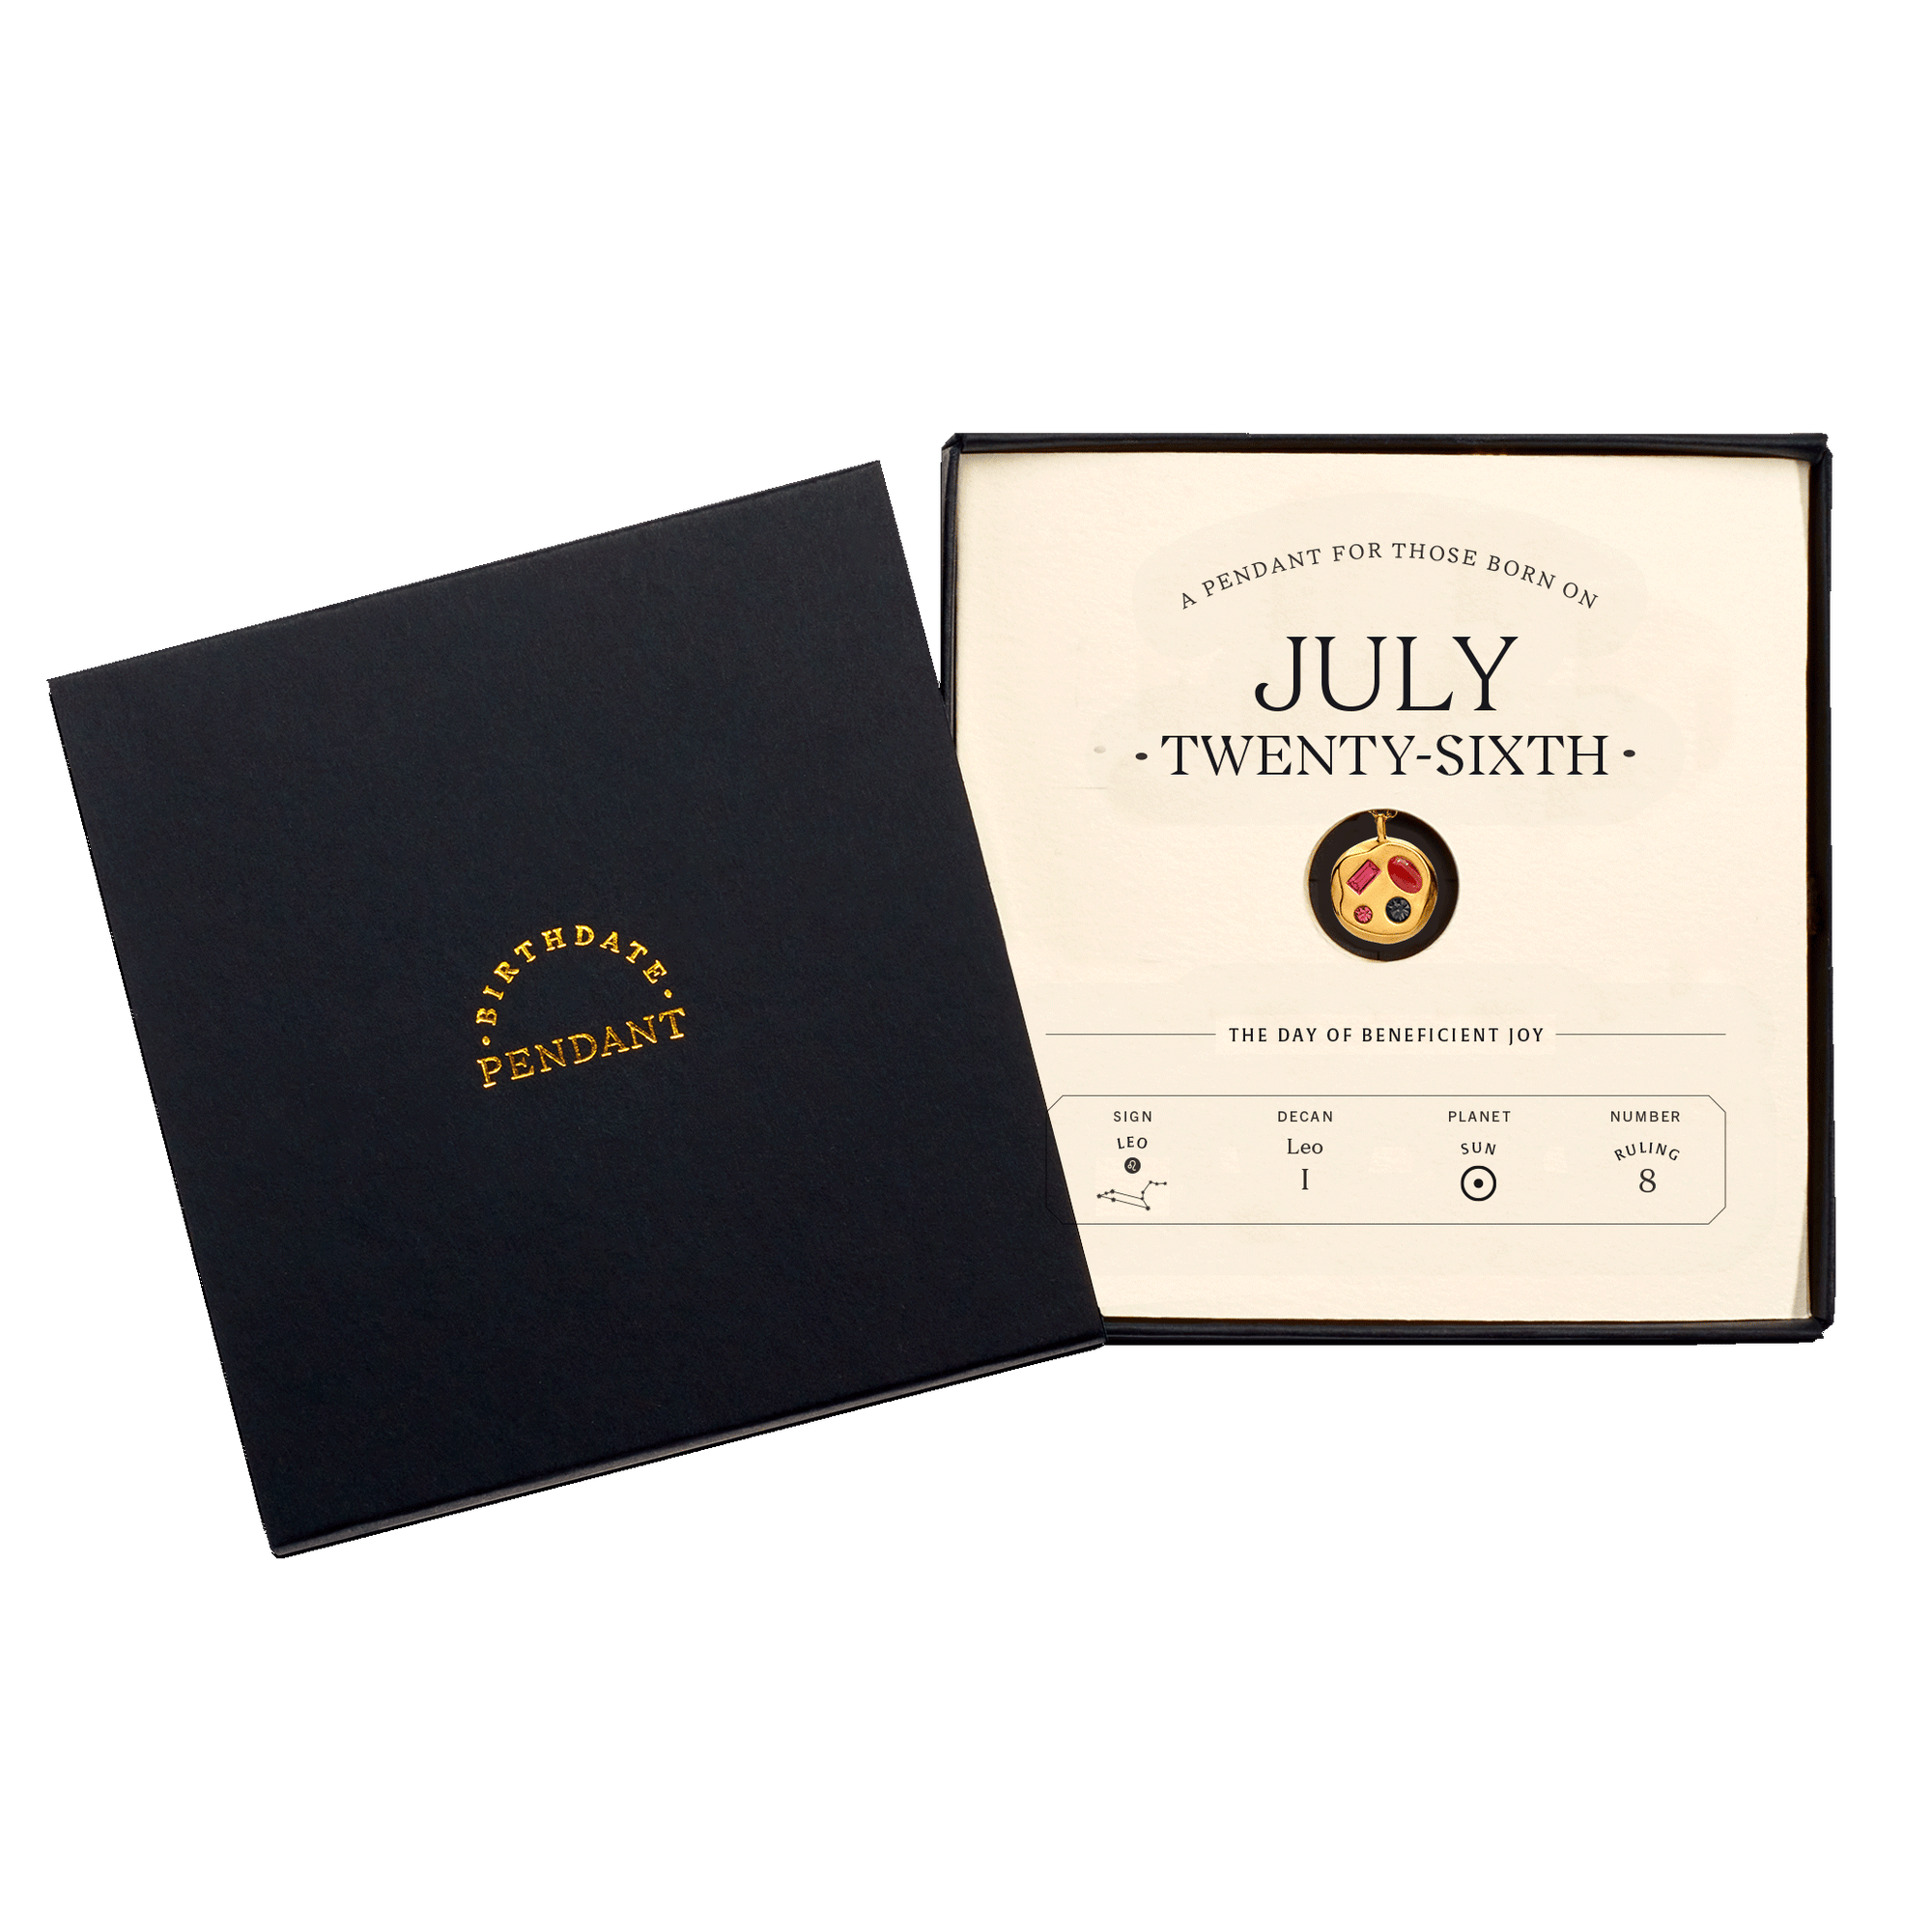 The July Twenty-Sixth Pendant inside its box